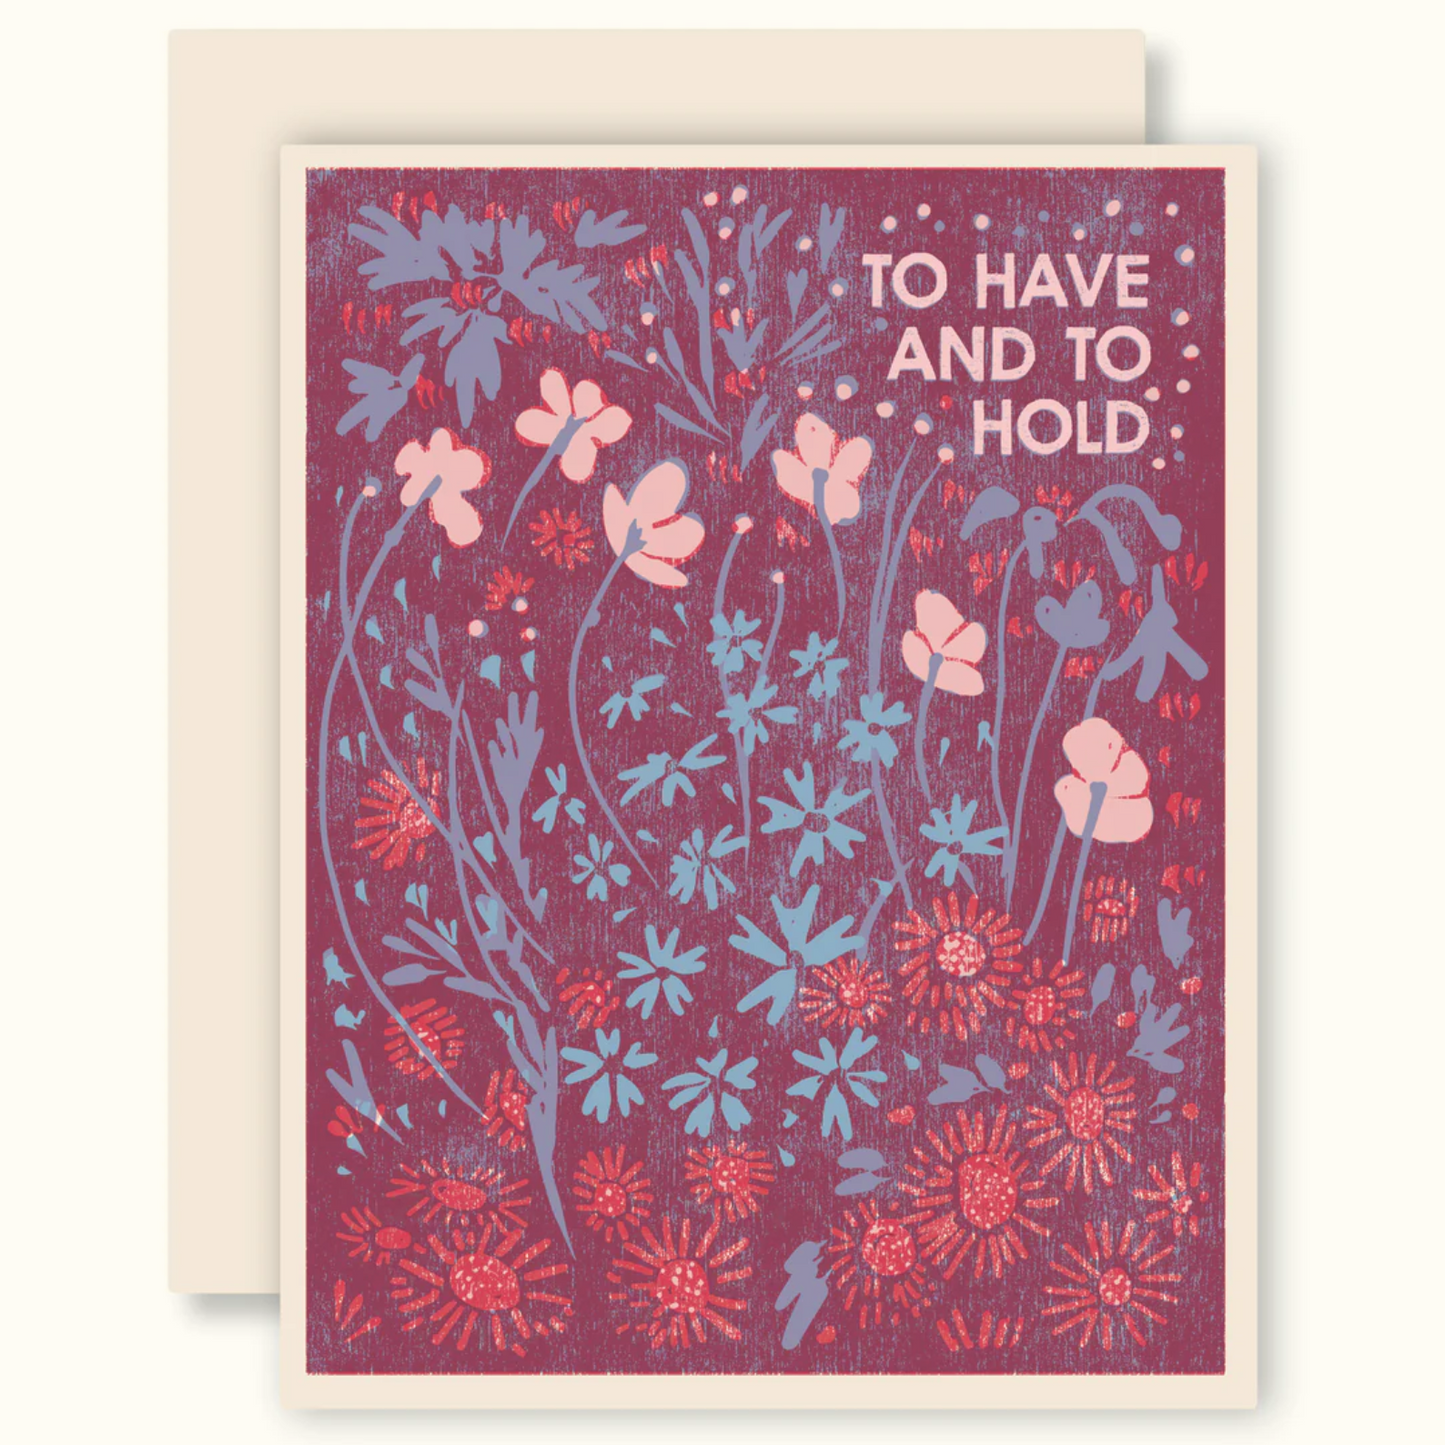 Heartell Press: Love & Friendship Cards